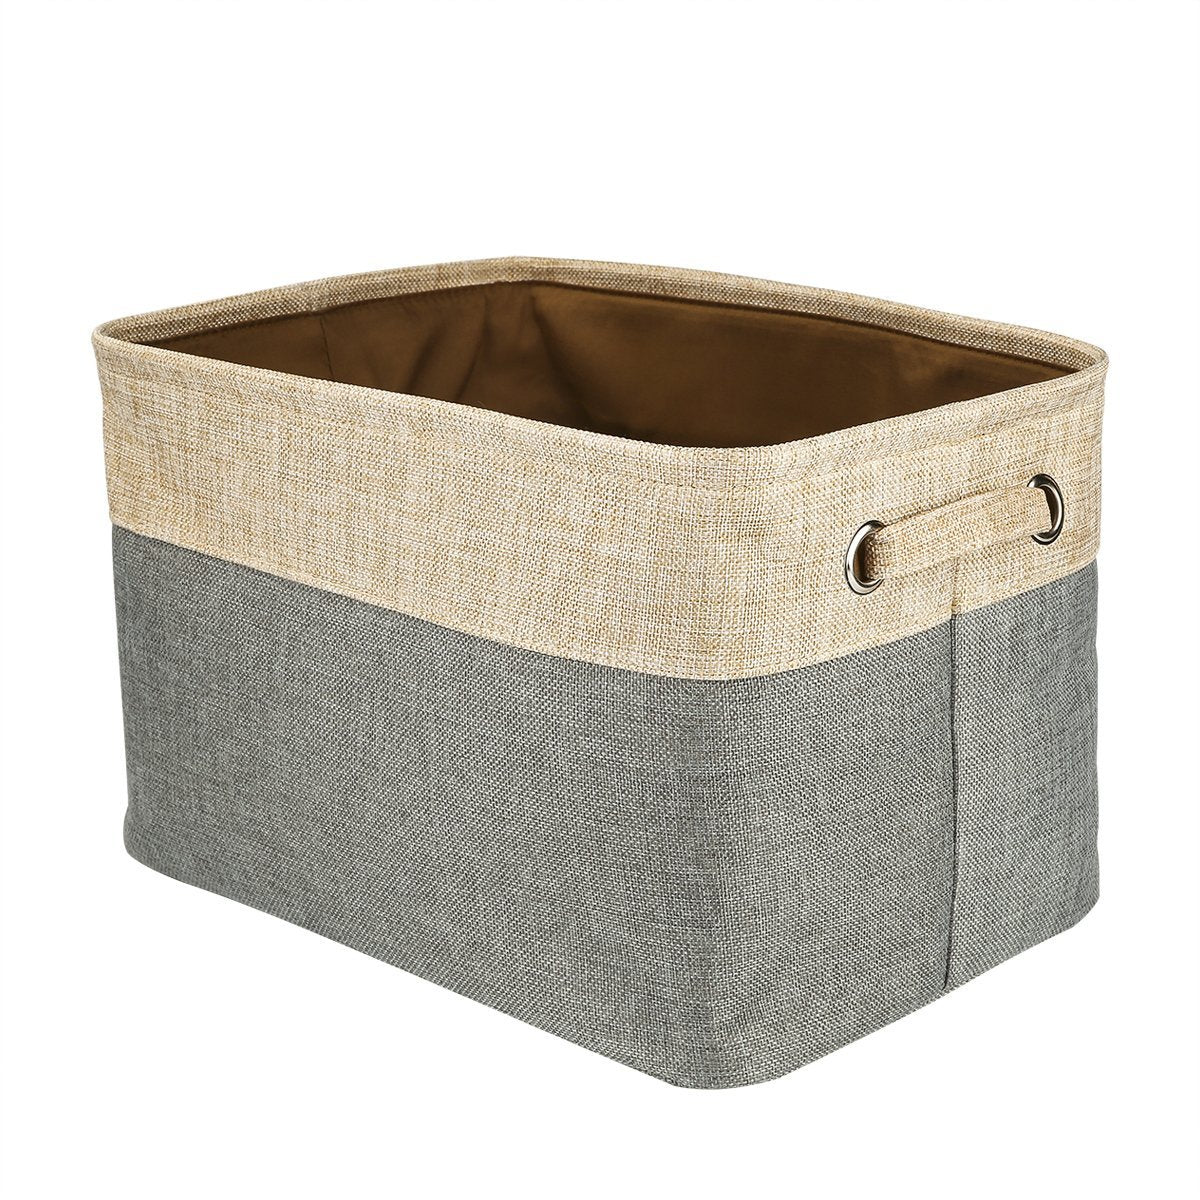 Foldable Convenient Storage Box Organizing Basket Closet Organizer with Handles, Cotton & Jute